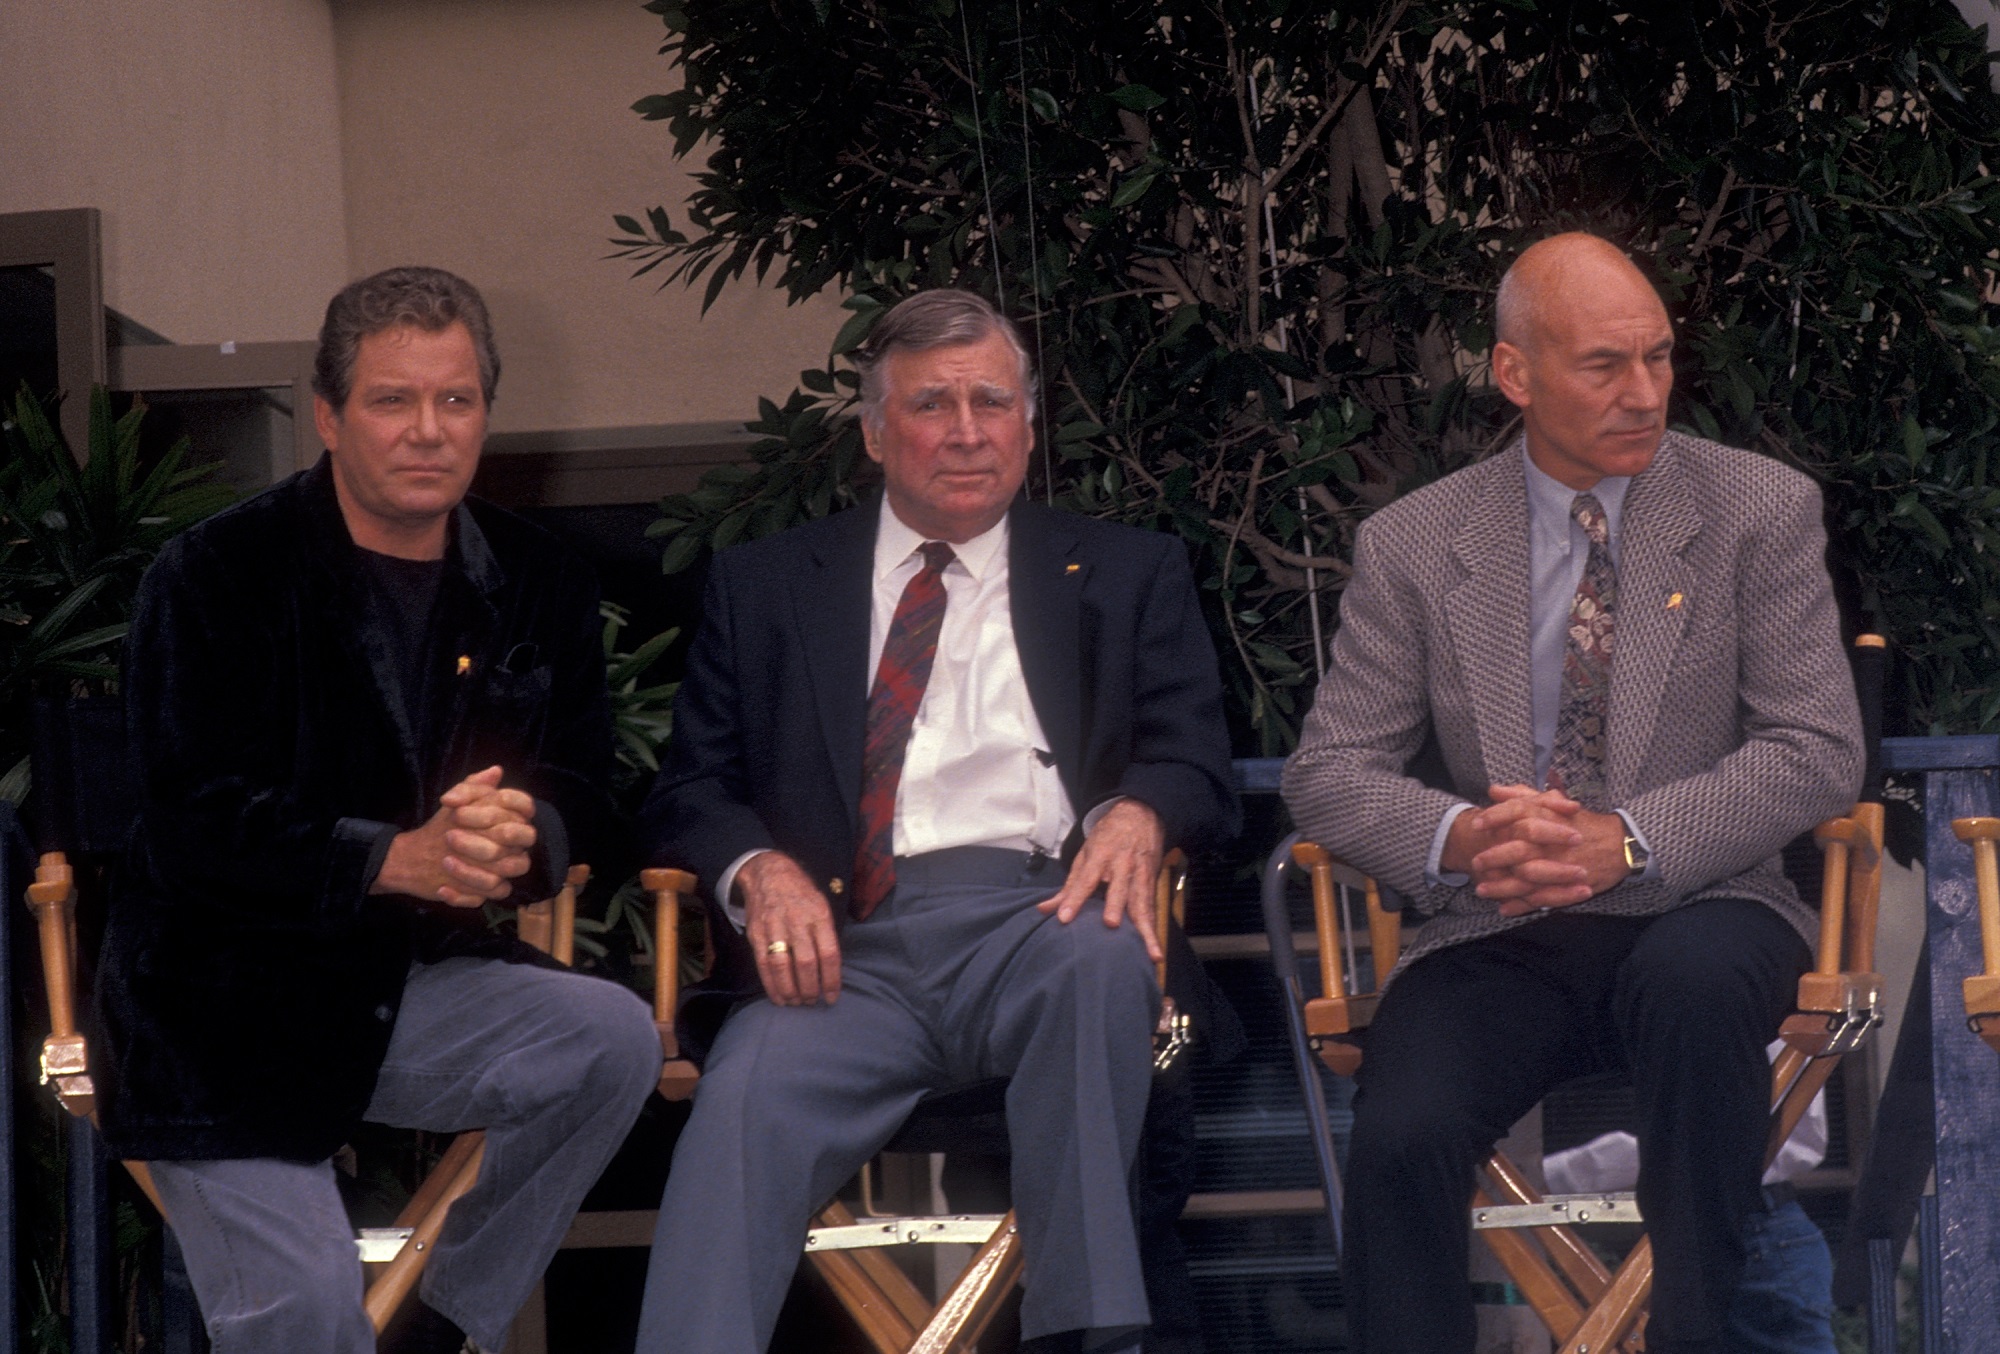 William Shatner, Gene Roddenberry, and Patrick Stewart of Star Trek